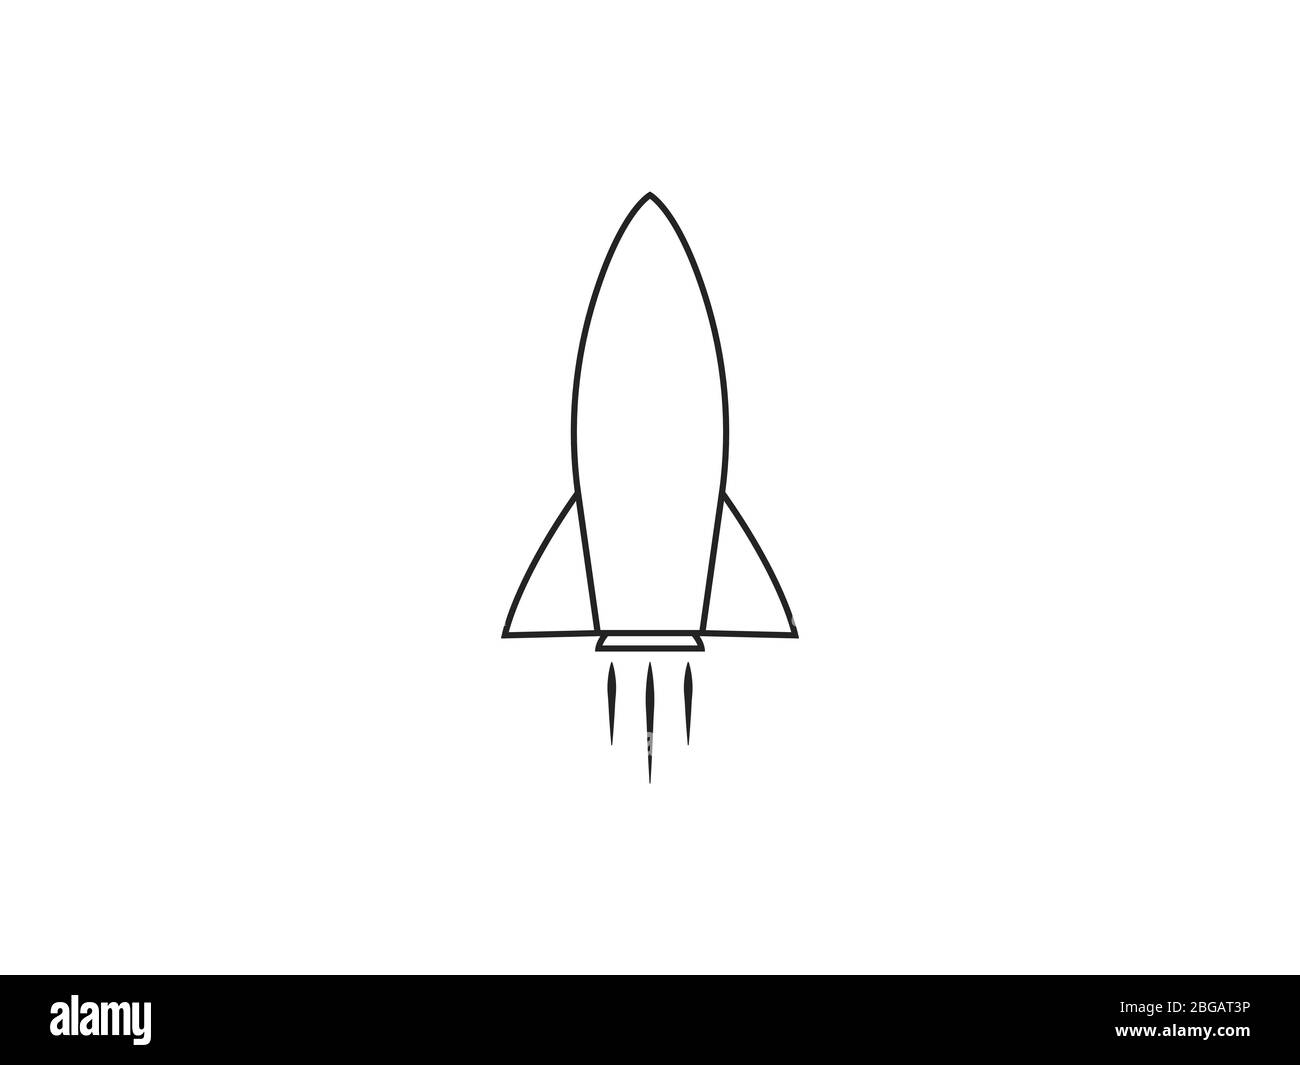 Start-, Rakete-, Start-Symbol. Vektorgrafik, flaches Design. Stock Vektor